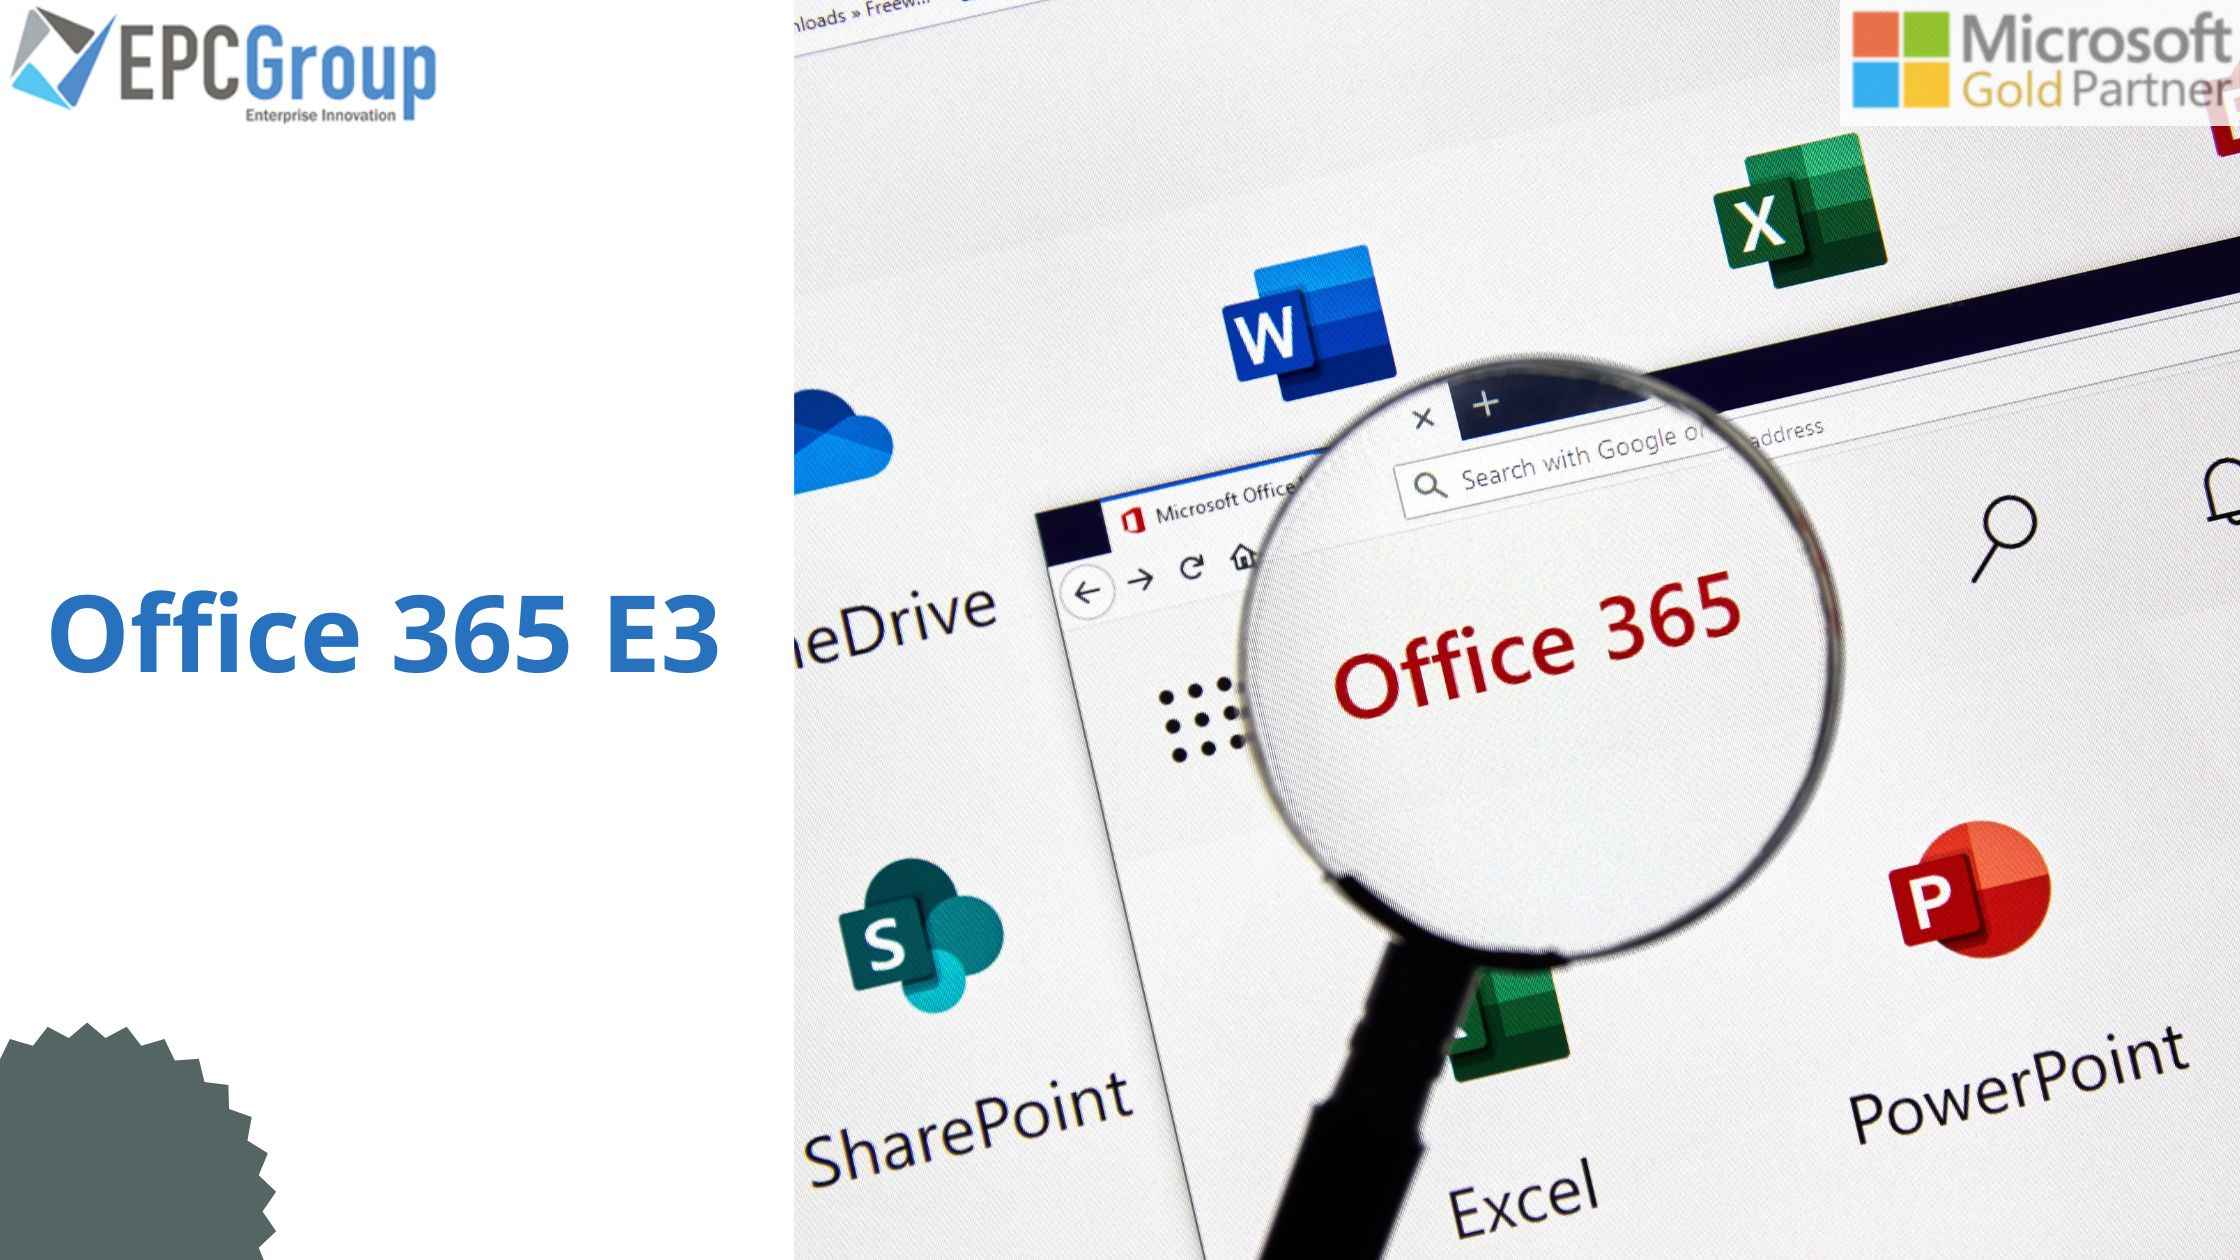 Office 365 E3: Microsoft’s Cloud-Based Suite